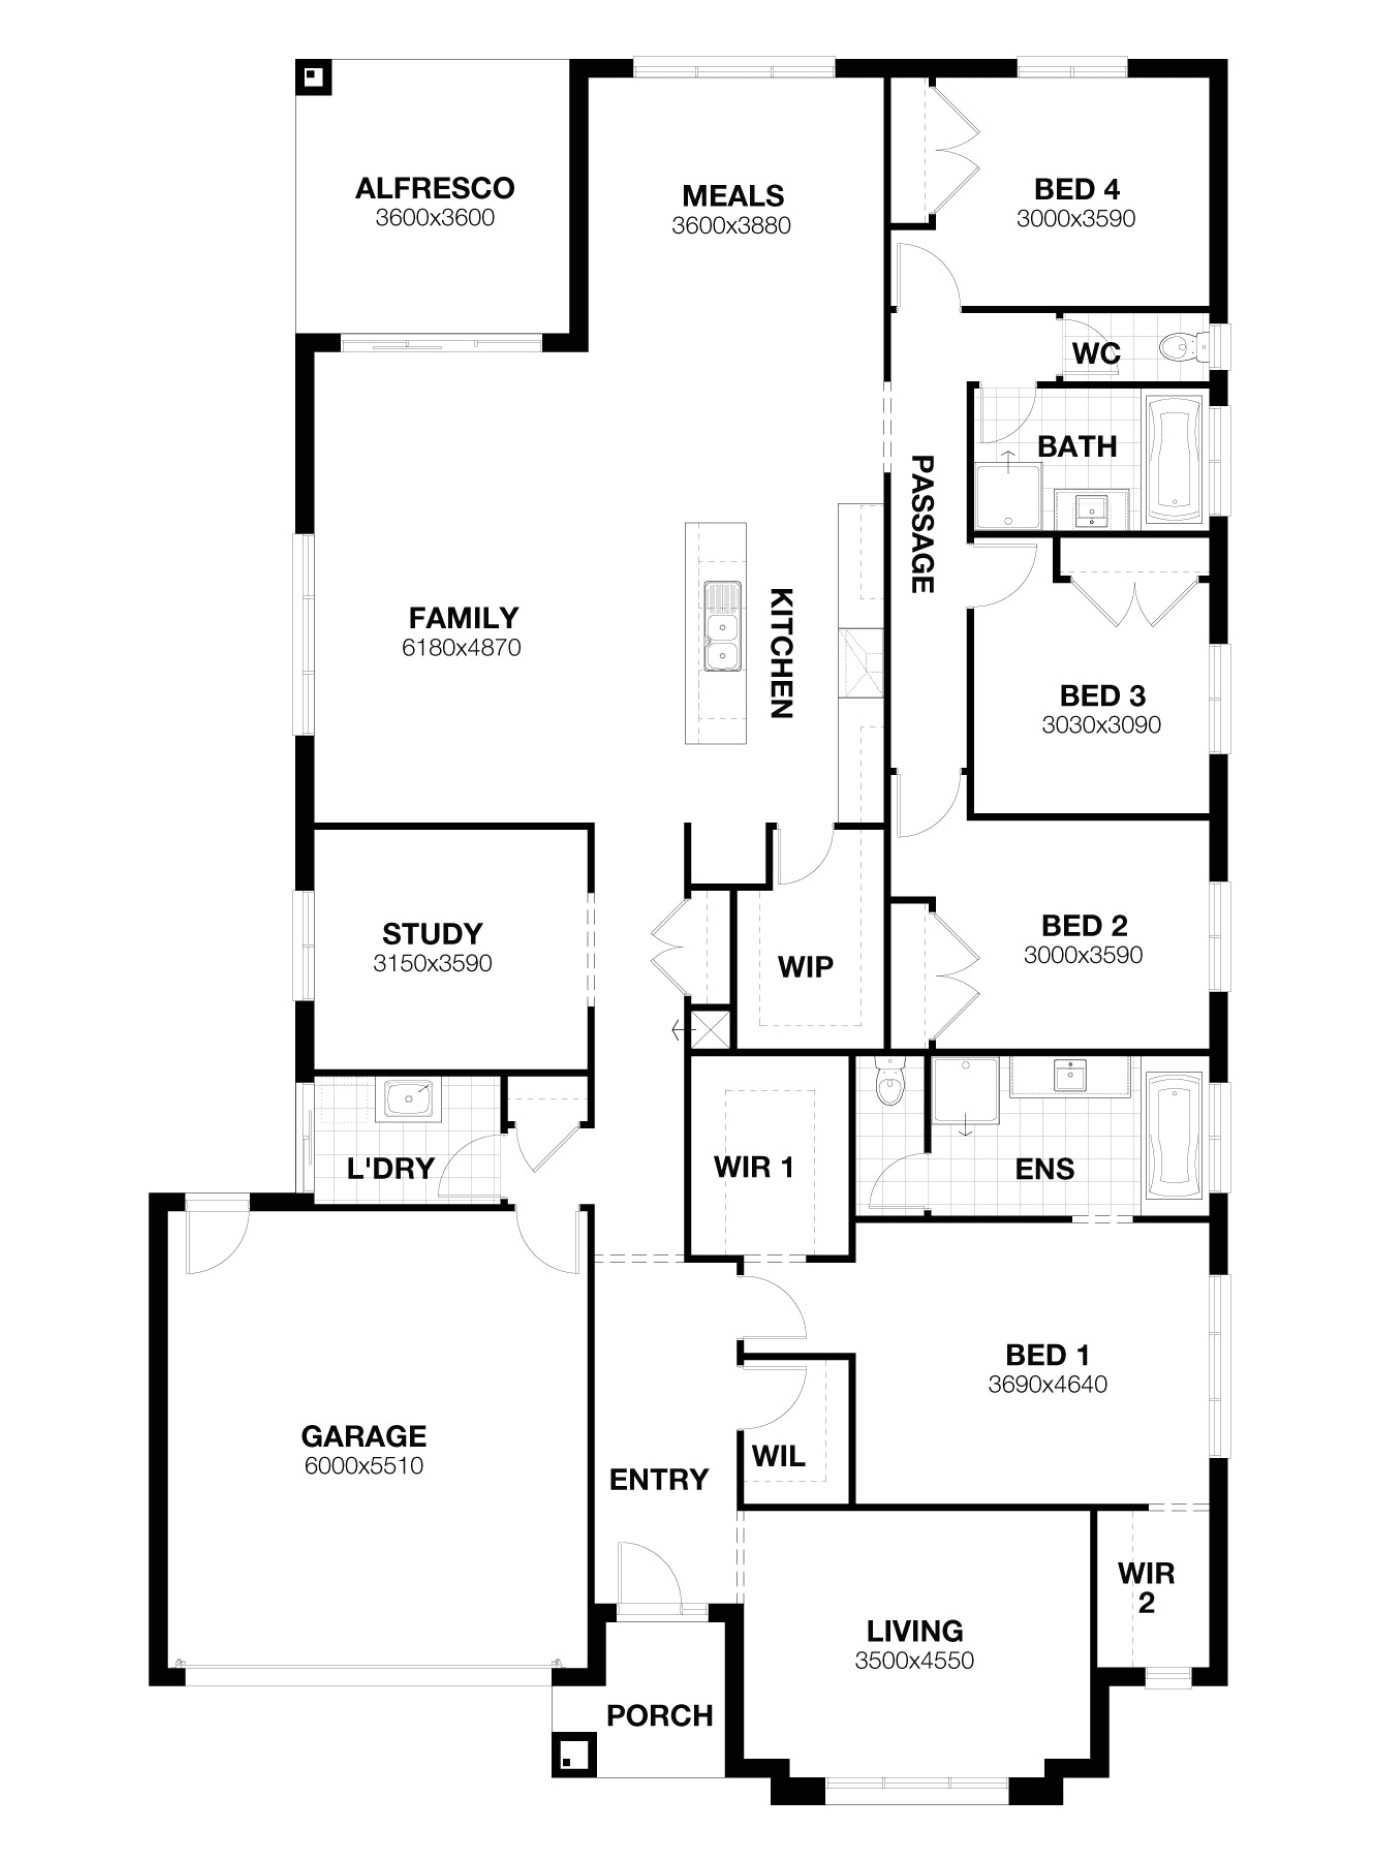 burbank homes floor plans